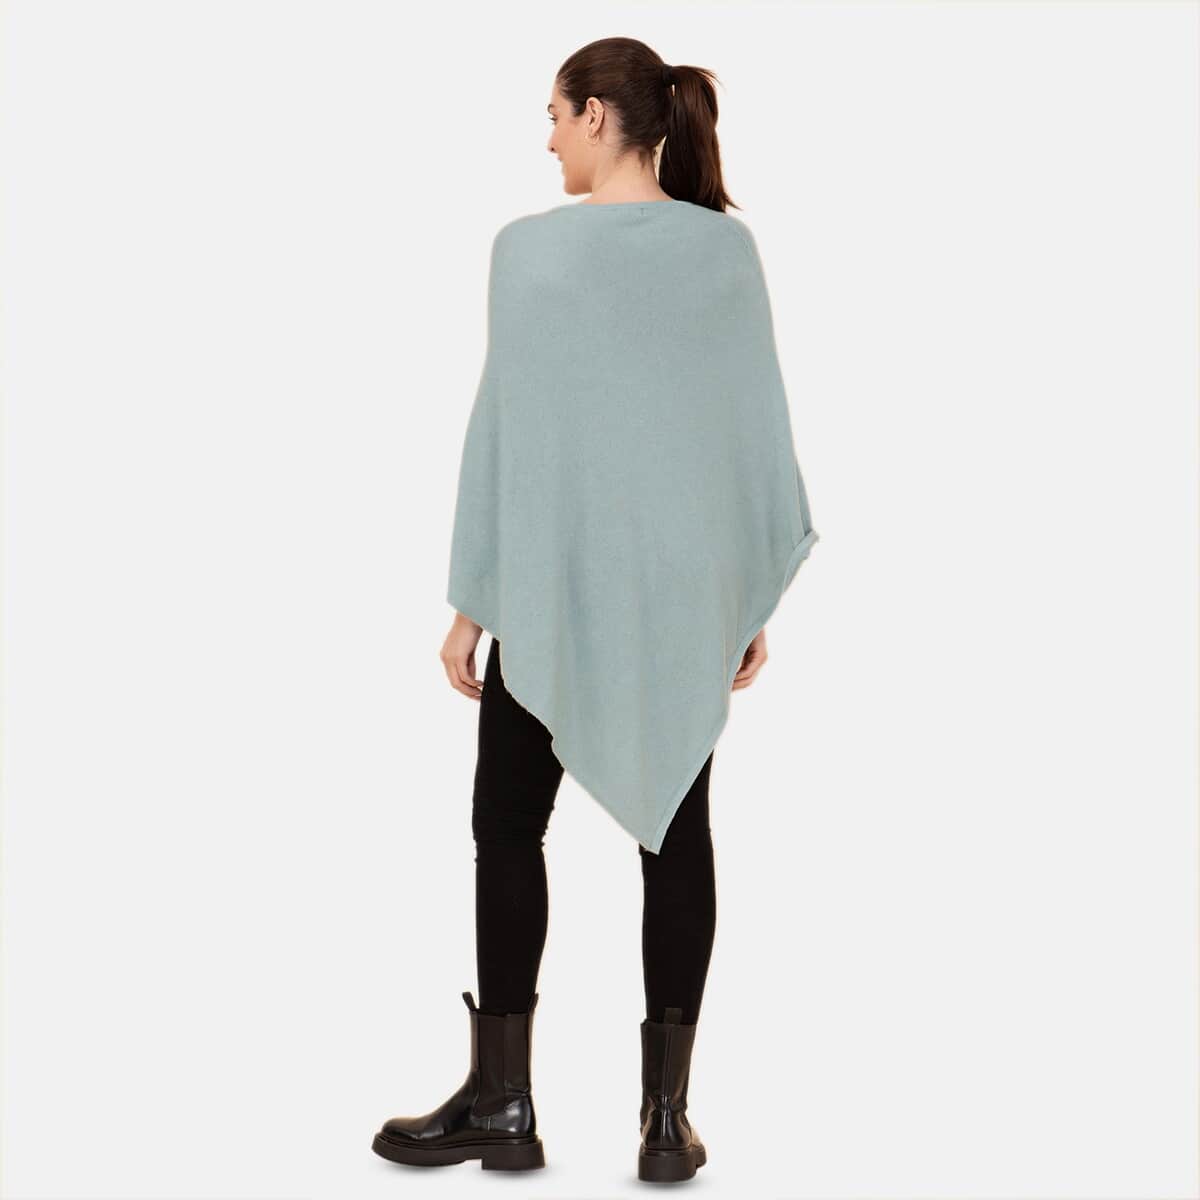 100% Cashmere Wool Designer LA MAREY Teal Poncho - One Size Fits Most image number 1